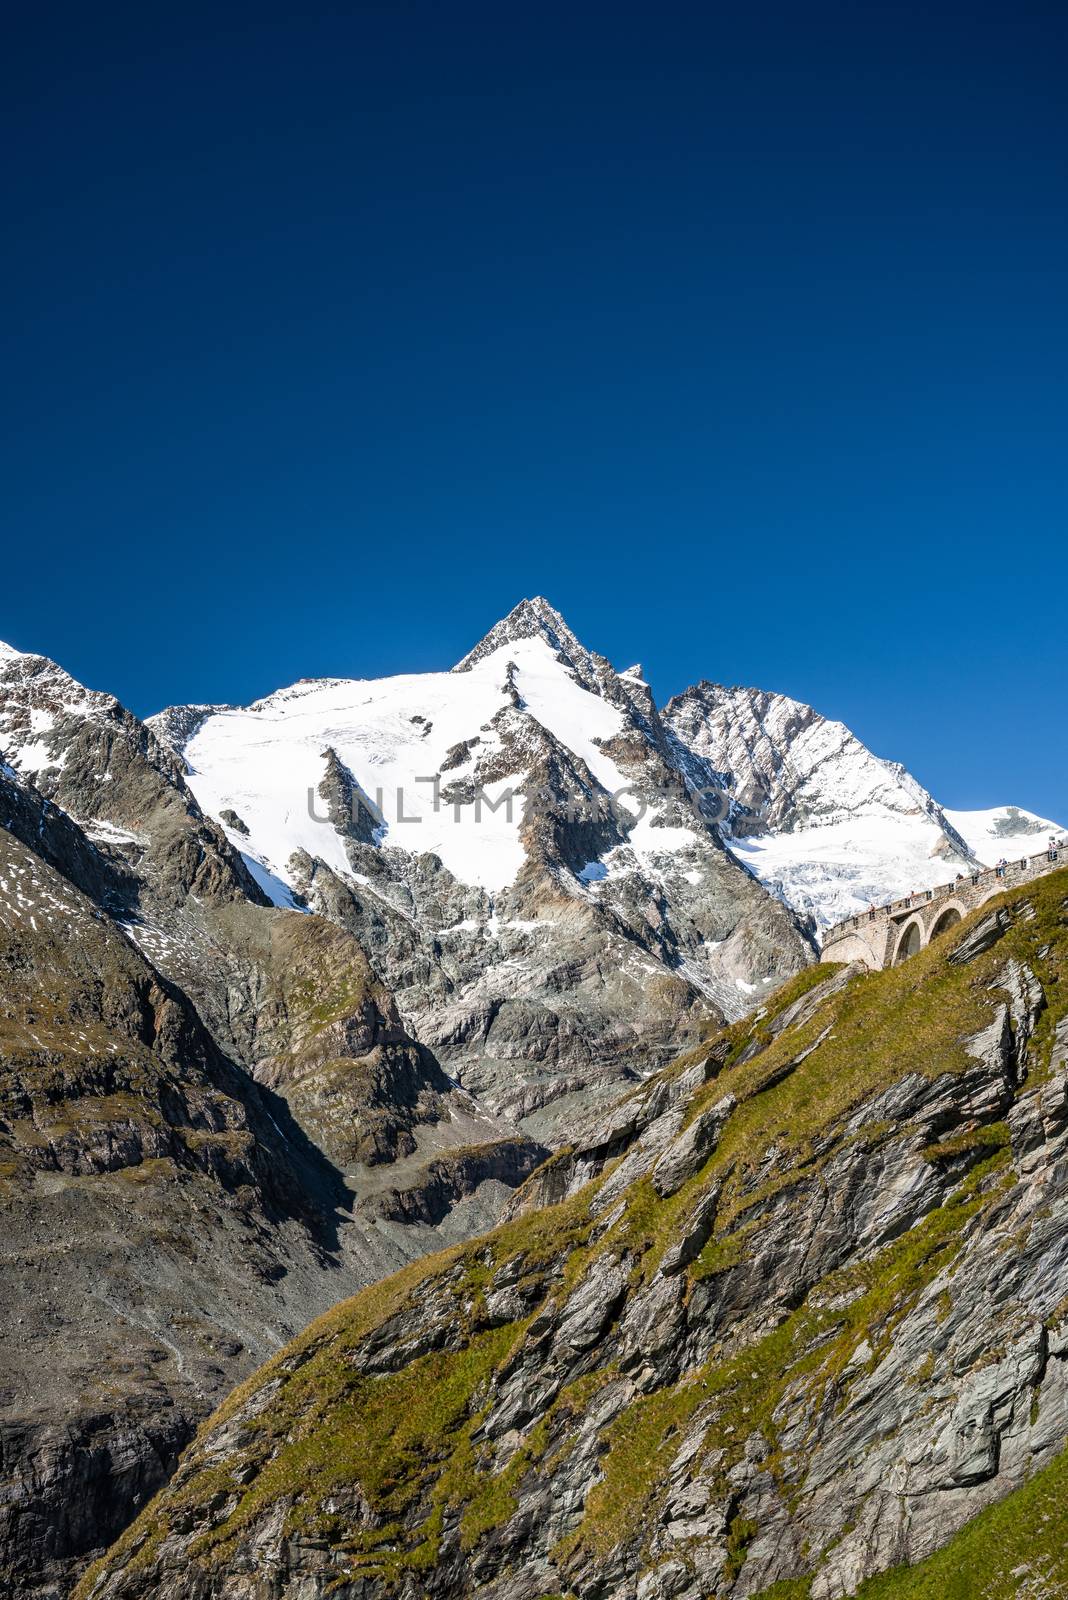 Grossglockner Glacier in Austria. Snow Capped Mountains Peaks.